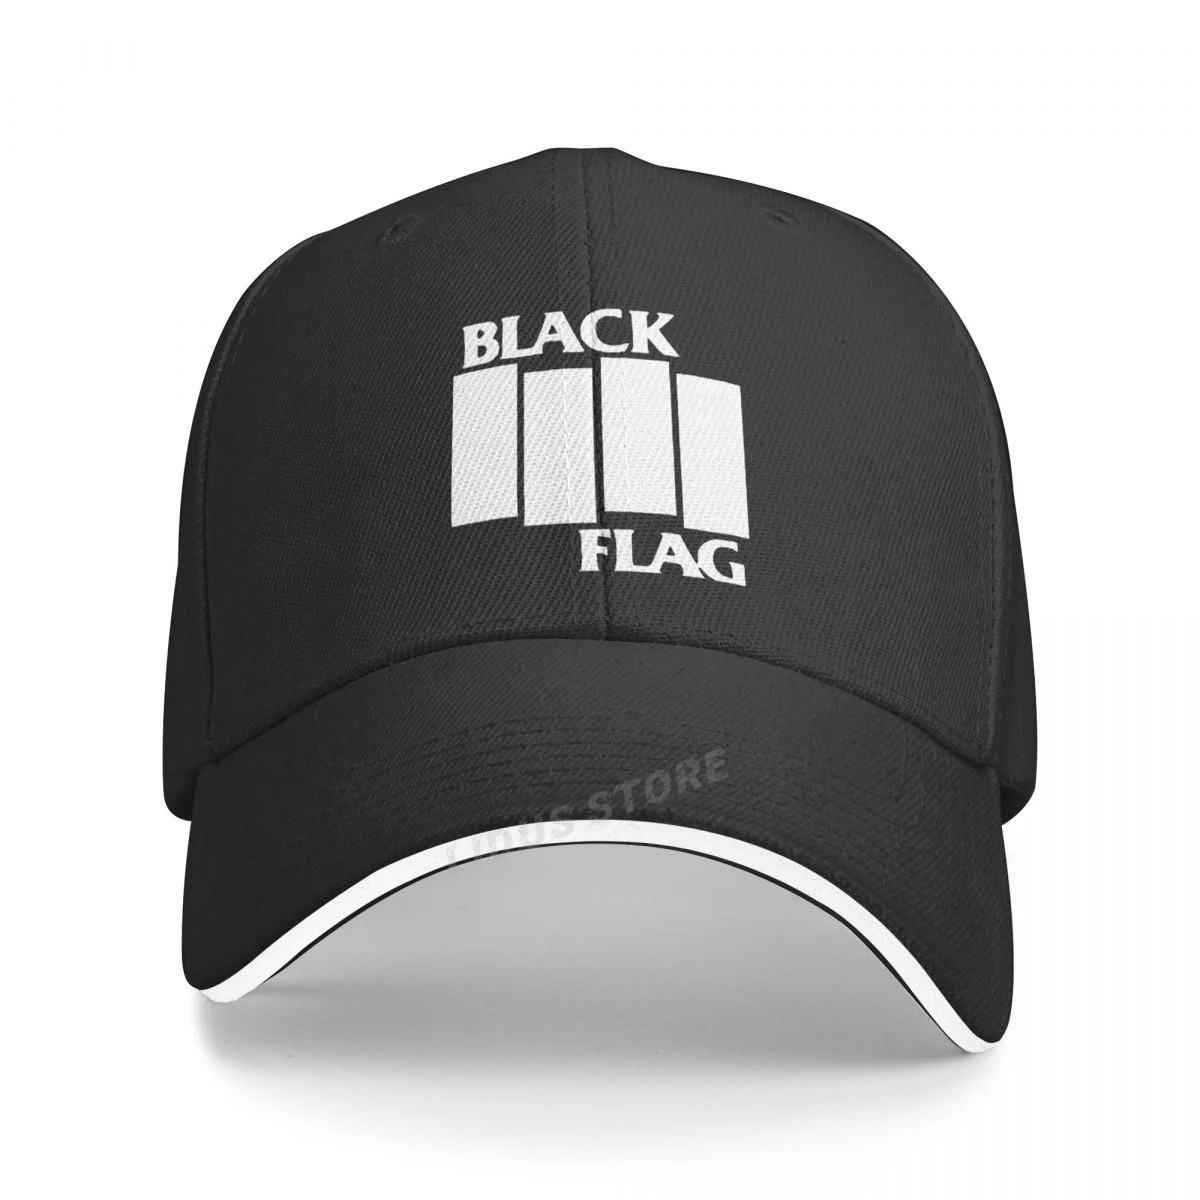 BLACK FLAG Pure Punk Rock Band Baseball Cap Summer Men Hip Hop Hat 100% Cotton Unisex Adjustable Black Flag Cap